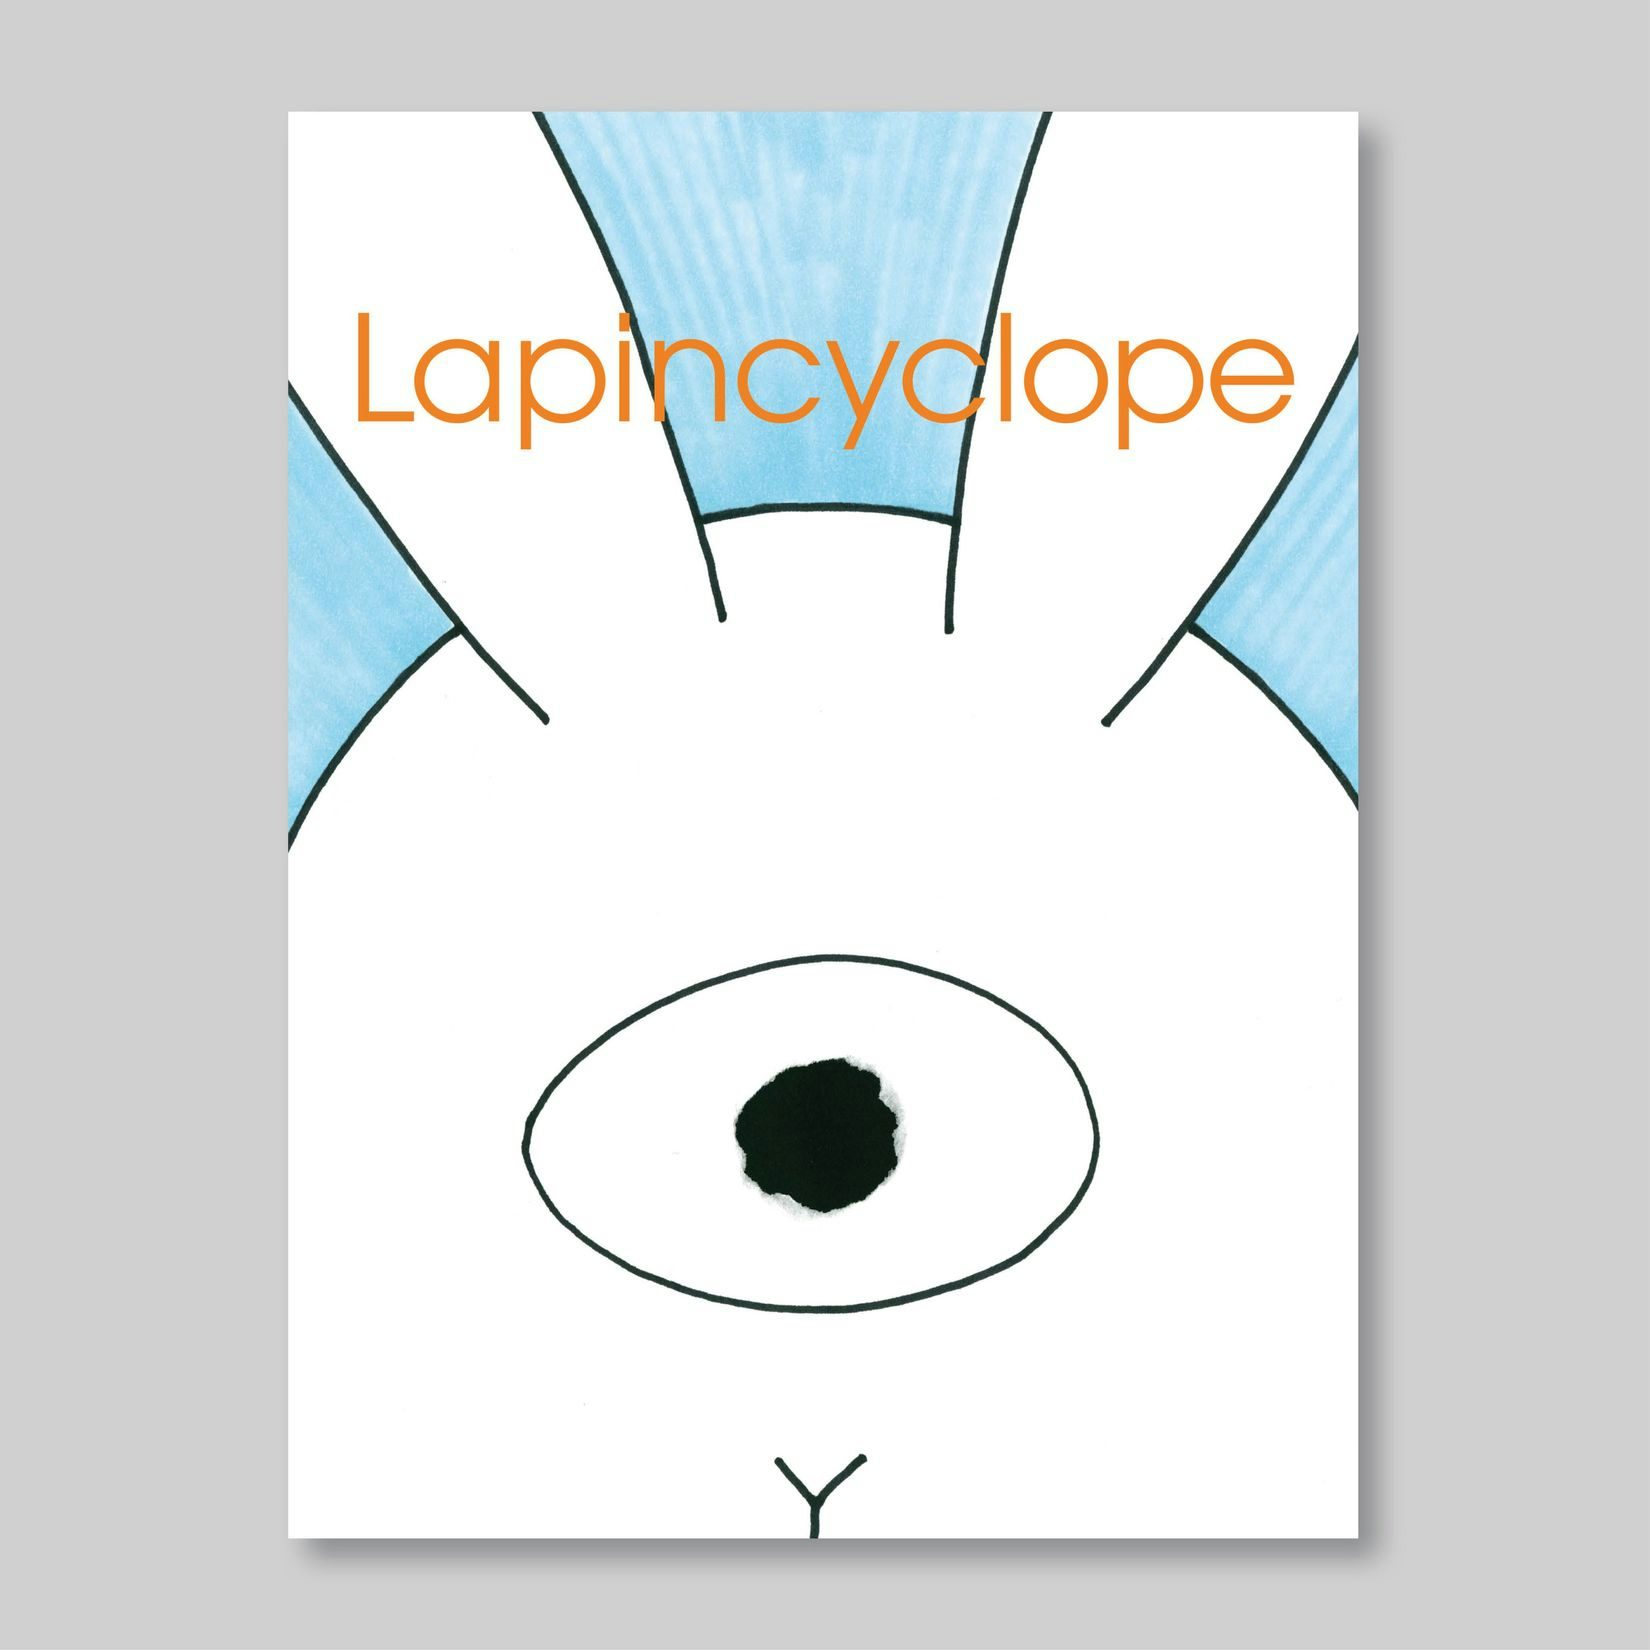 Publication Jonathan Plante - Lapincyclope